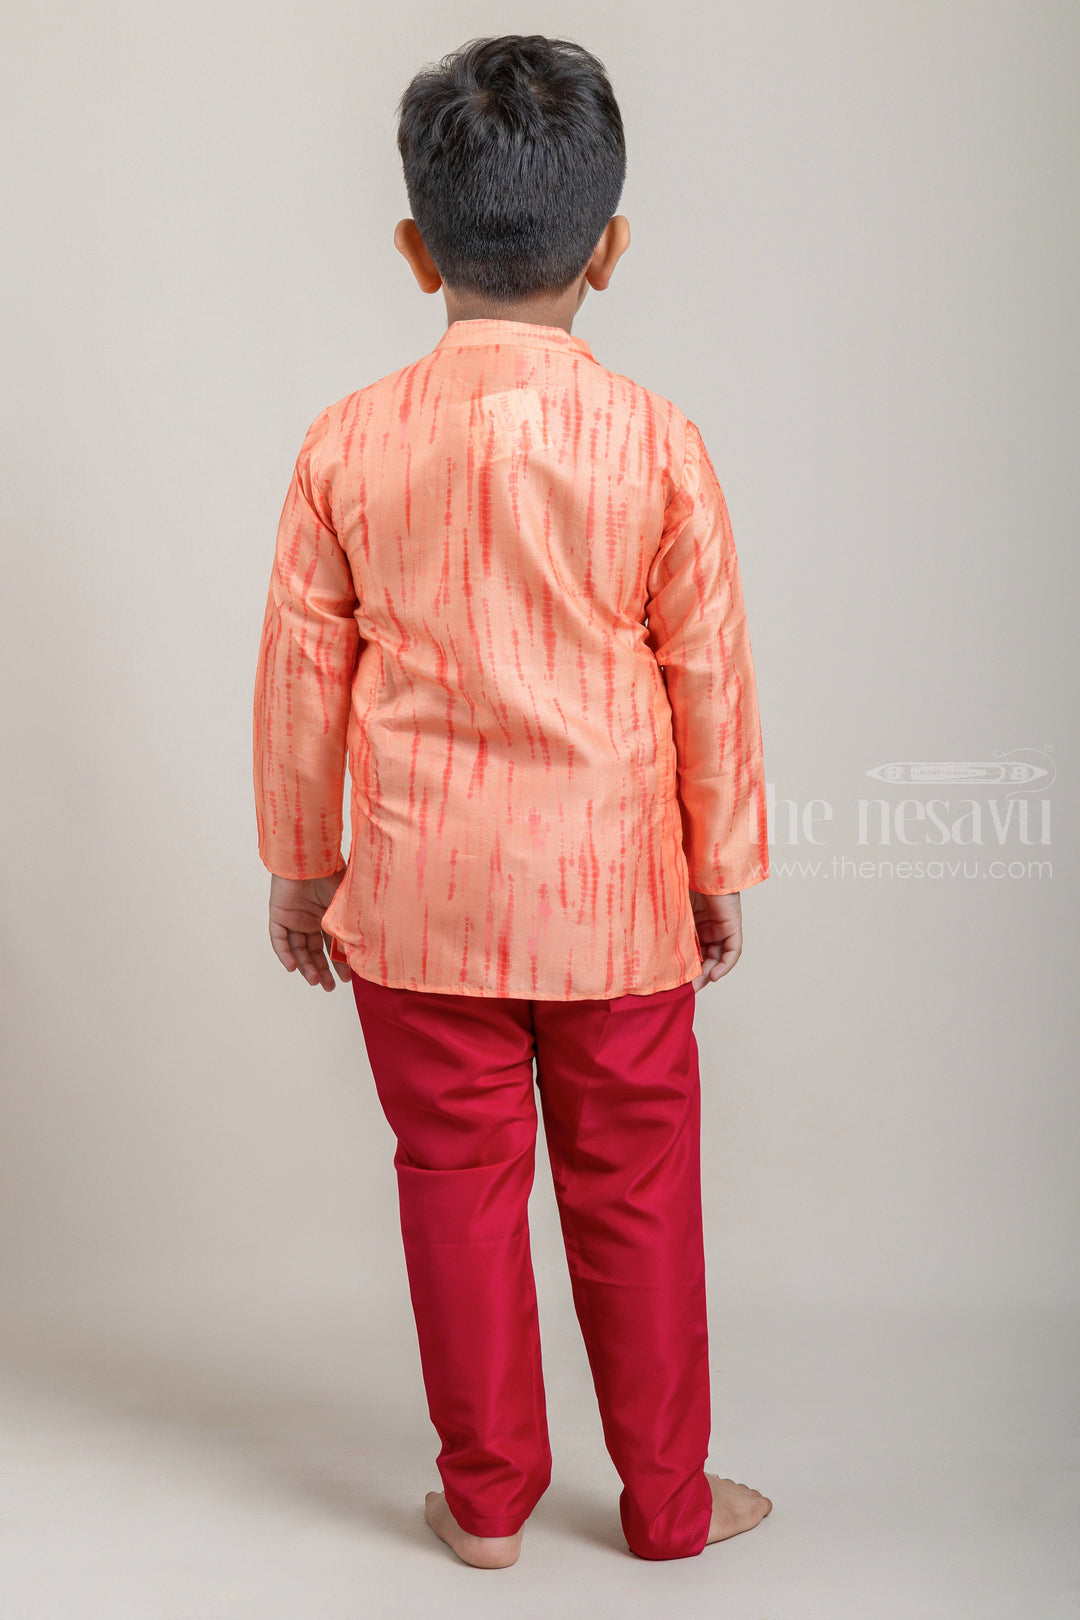 The Nesavu Ethnic Sets Tie and Dyed Orange Boys Kurta with Red Pant psr silks Nesavu